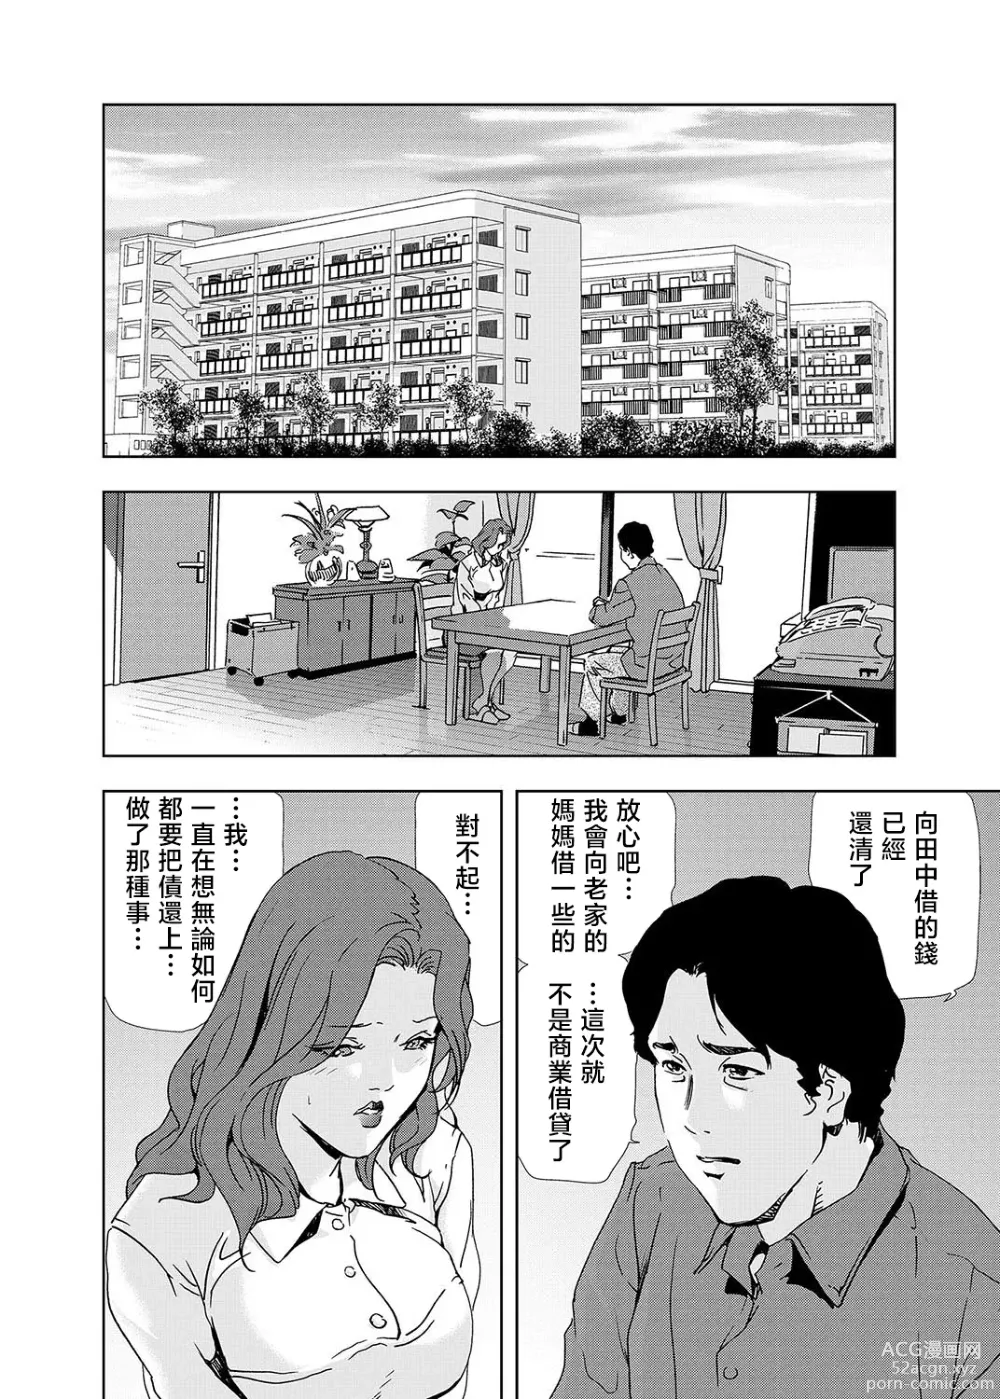 Page 2 of manga Netorare Vol.02